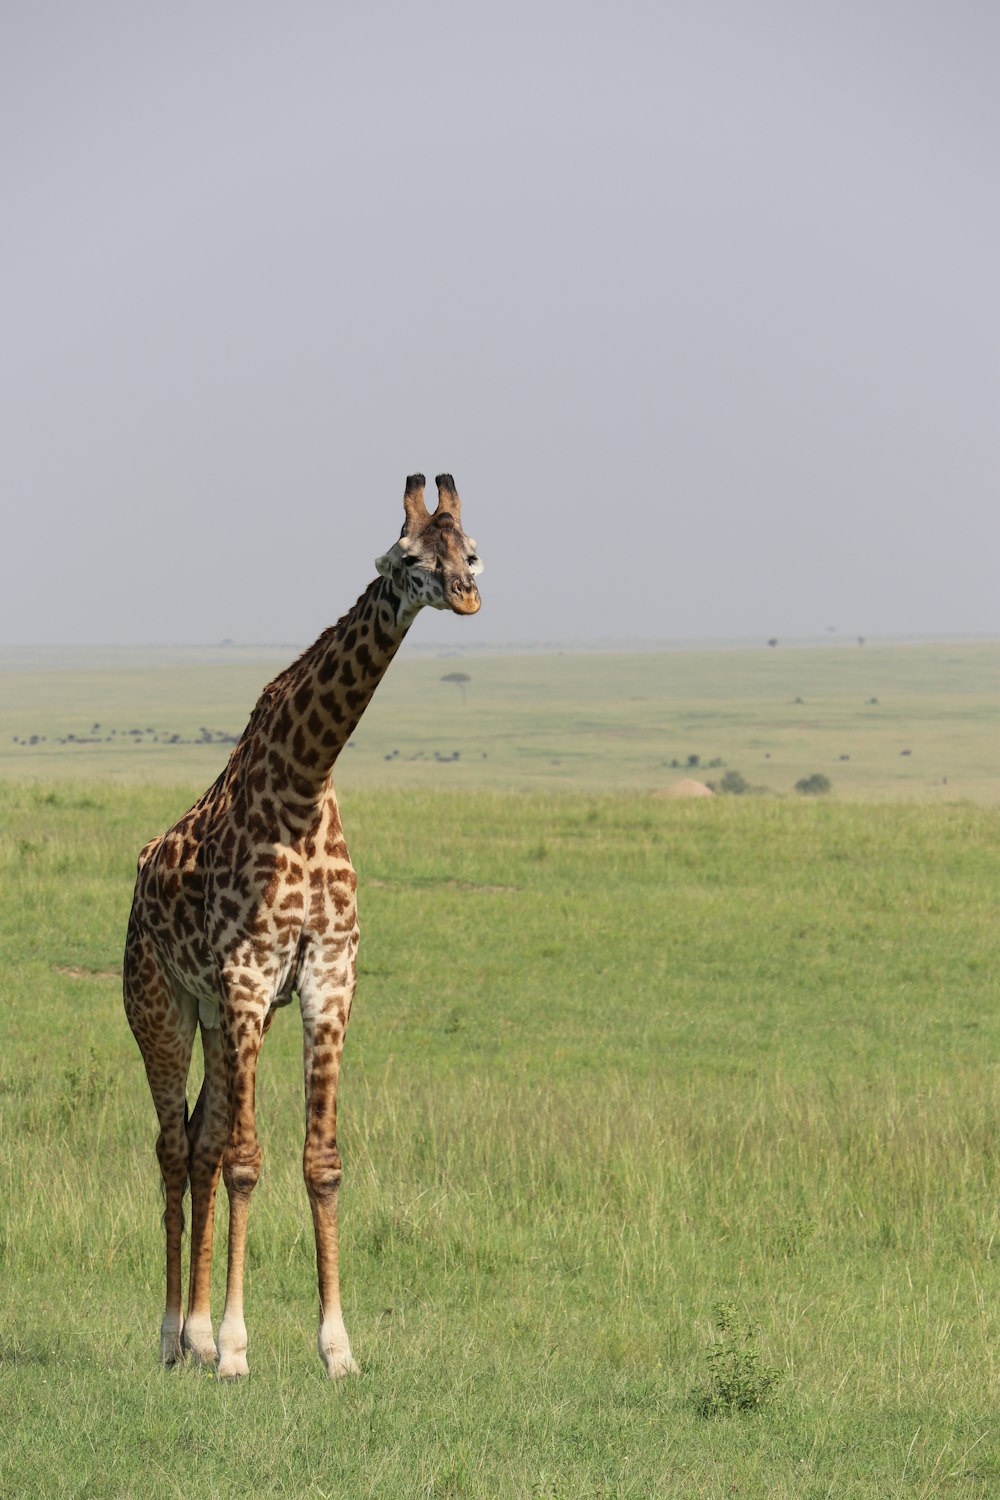 girafa na grama verde durante o dia